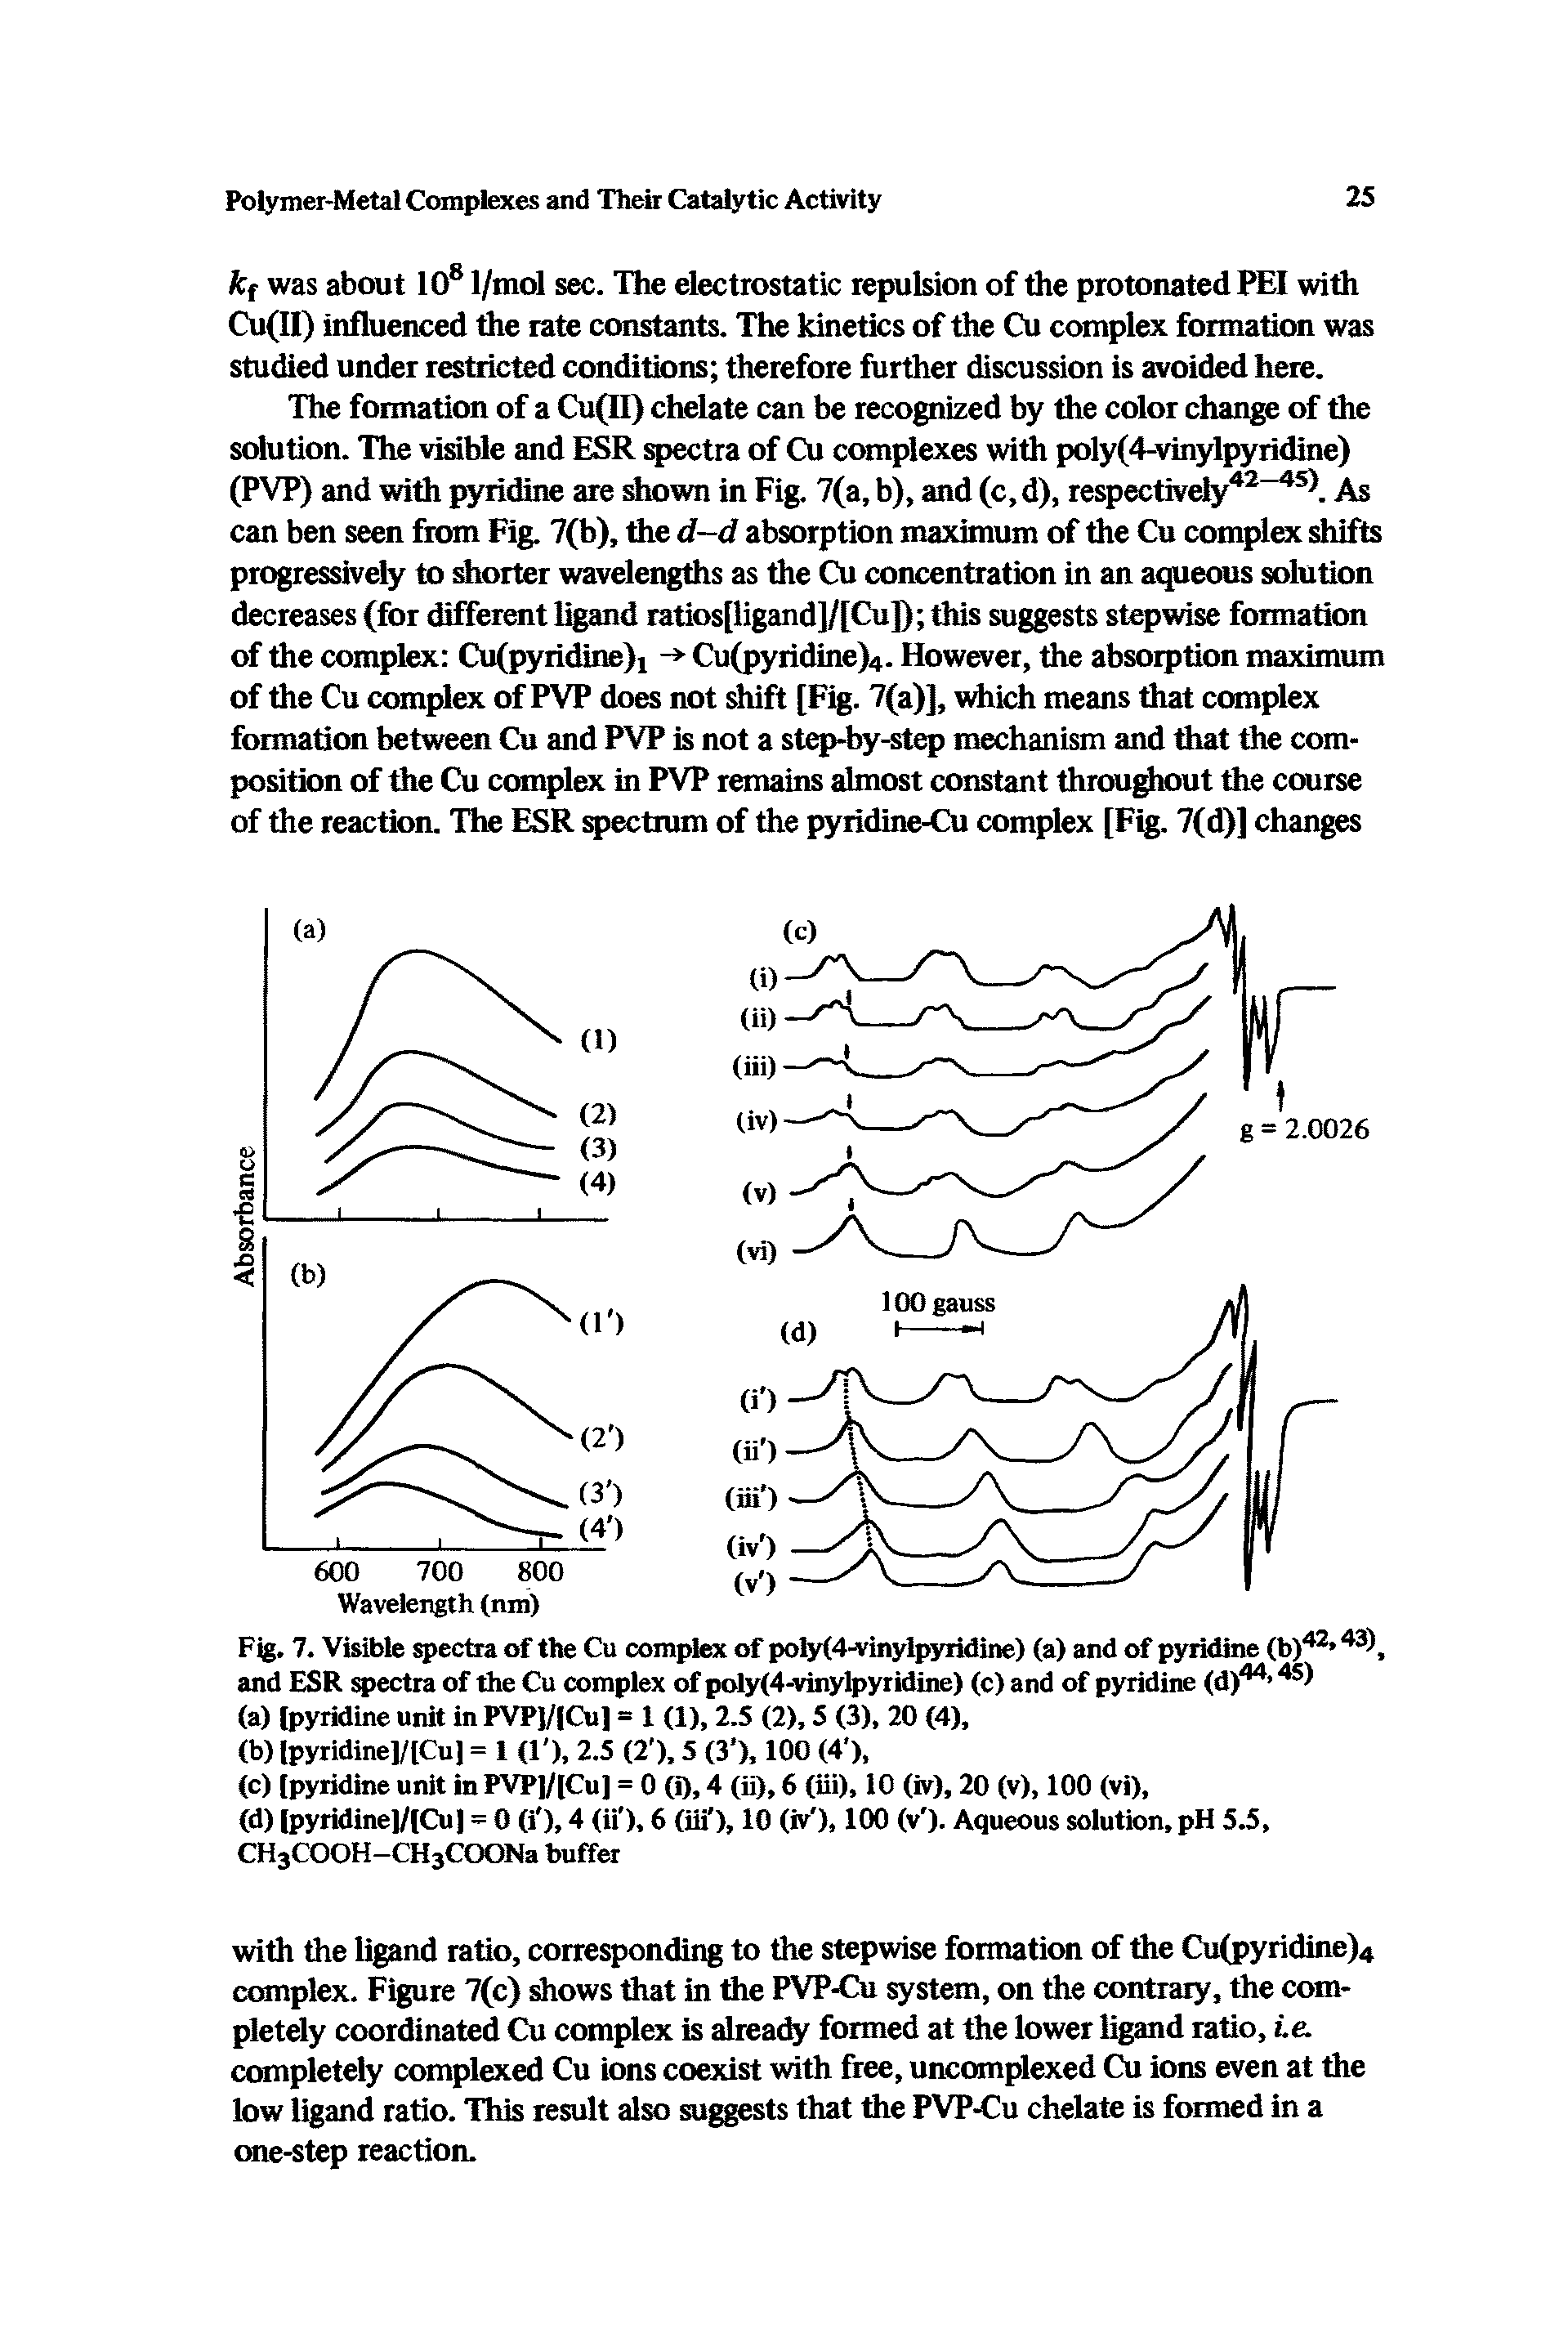 Fig. 7. Visible spectra of the Cu complex of poly(4-vinylpyridine) (a) and of pyridine (b)42,43 and ESR spectra of the Cu complex of poly(4-vinylpyridine) (c) and of pyridine (d)44,4S)...